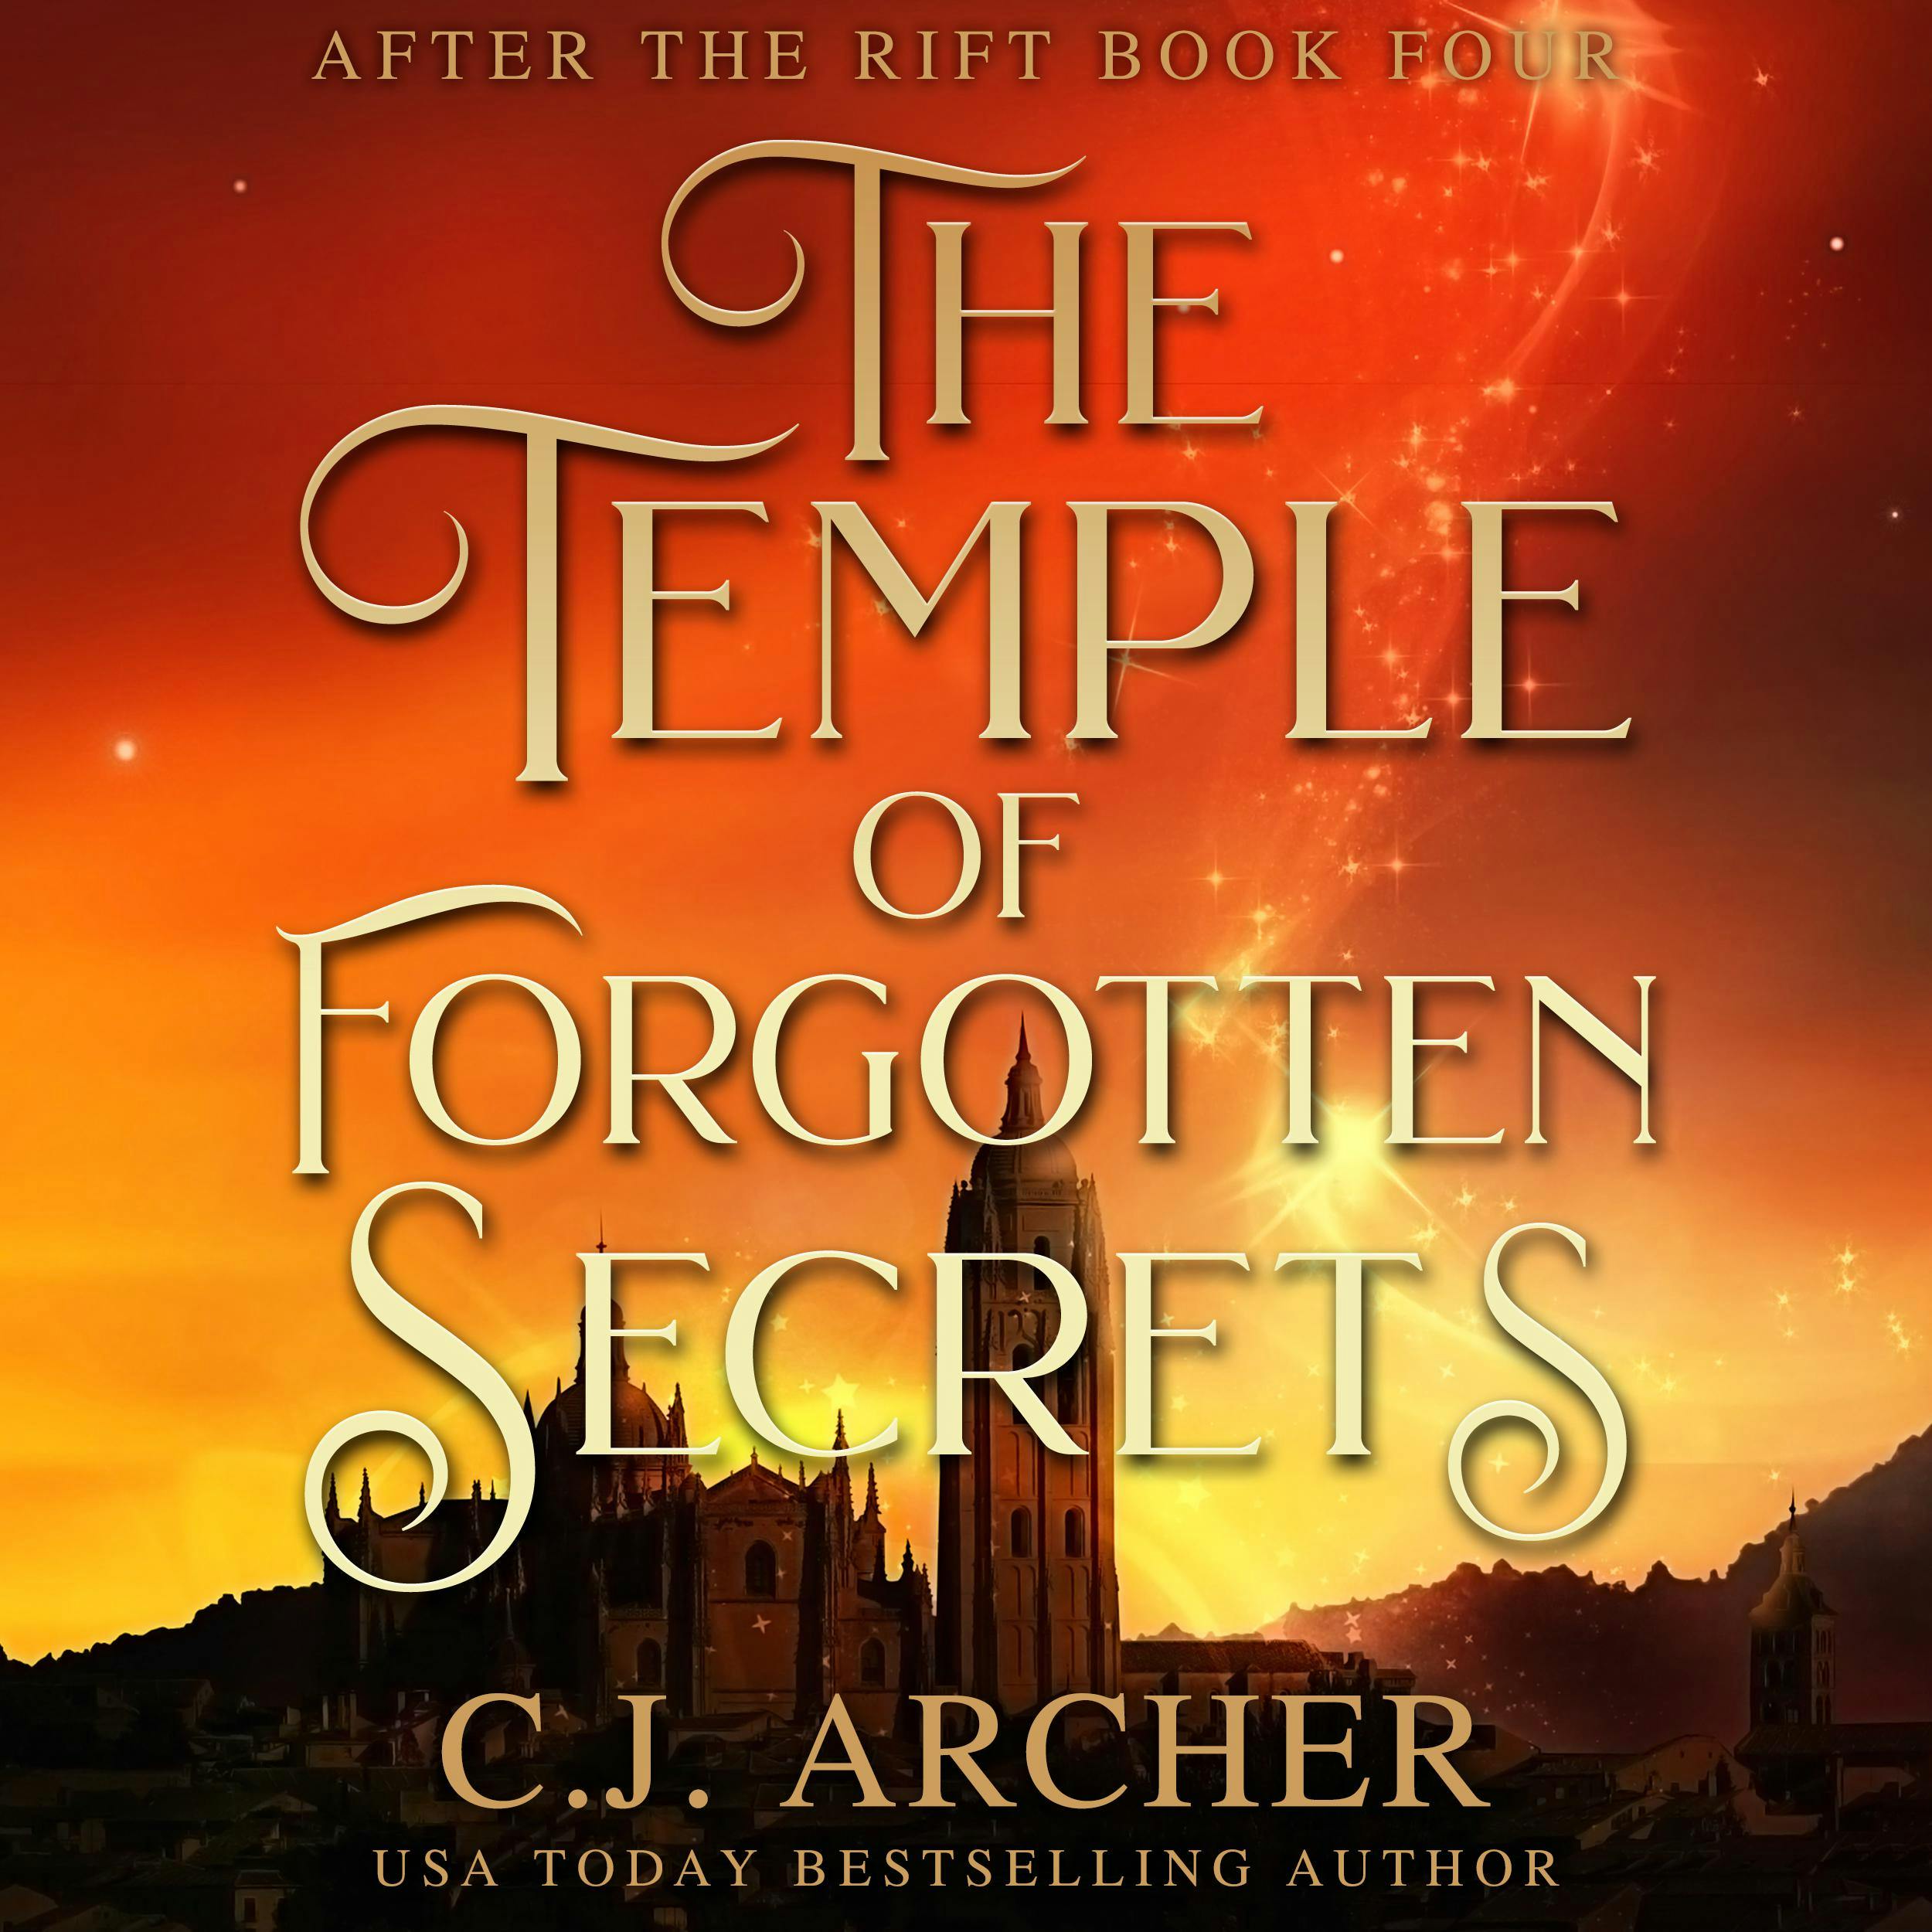 The Temple of Forgotten Secrets: After The Rift, book 4 - C.J. Archer